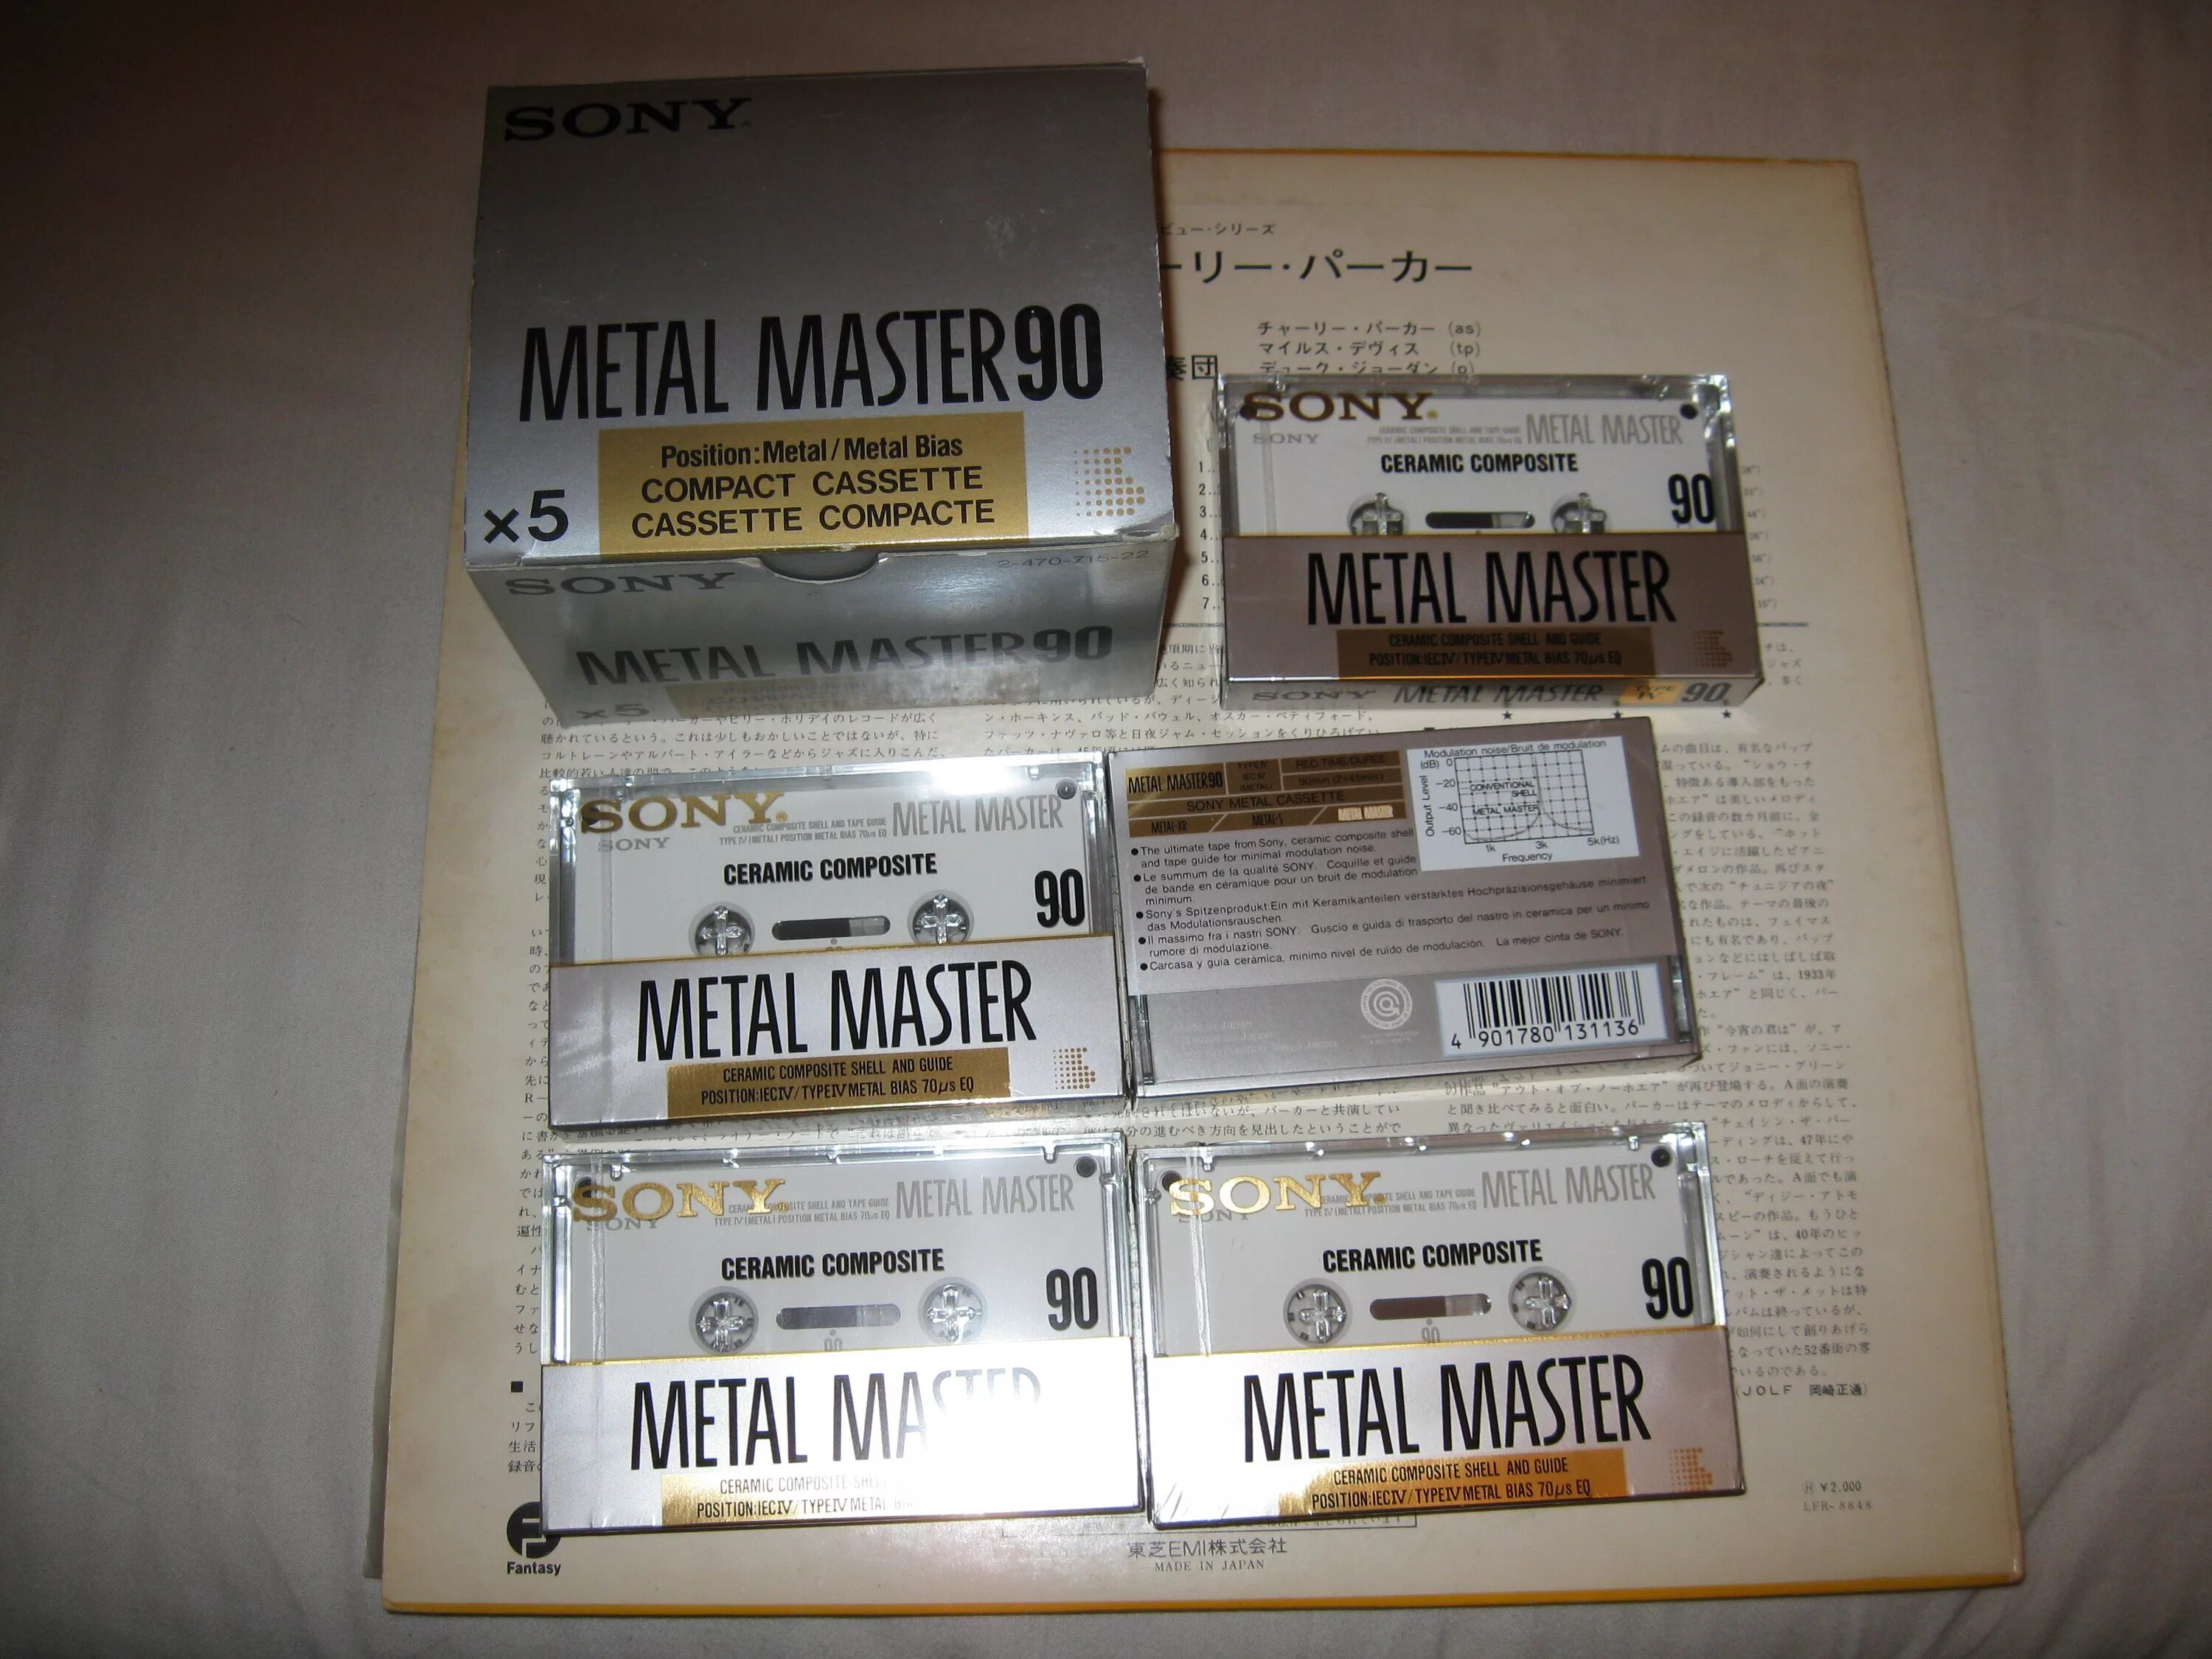 Аудиокассета Sony Metal Master 90. Cassette Sony Esprit IV Metal 100 Sealed. Sony Metal Ceramic. YAMASHIN Metal Master диск.